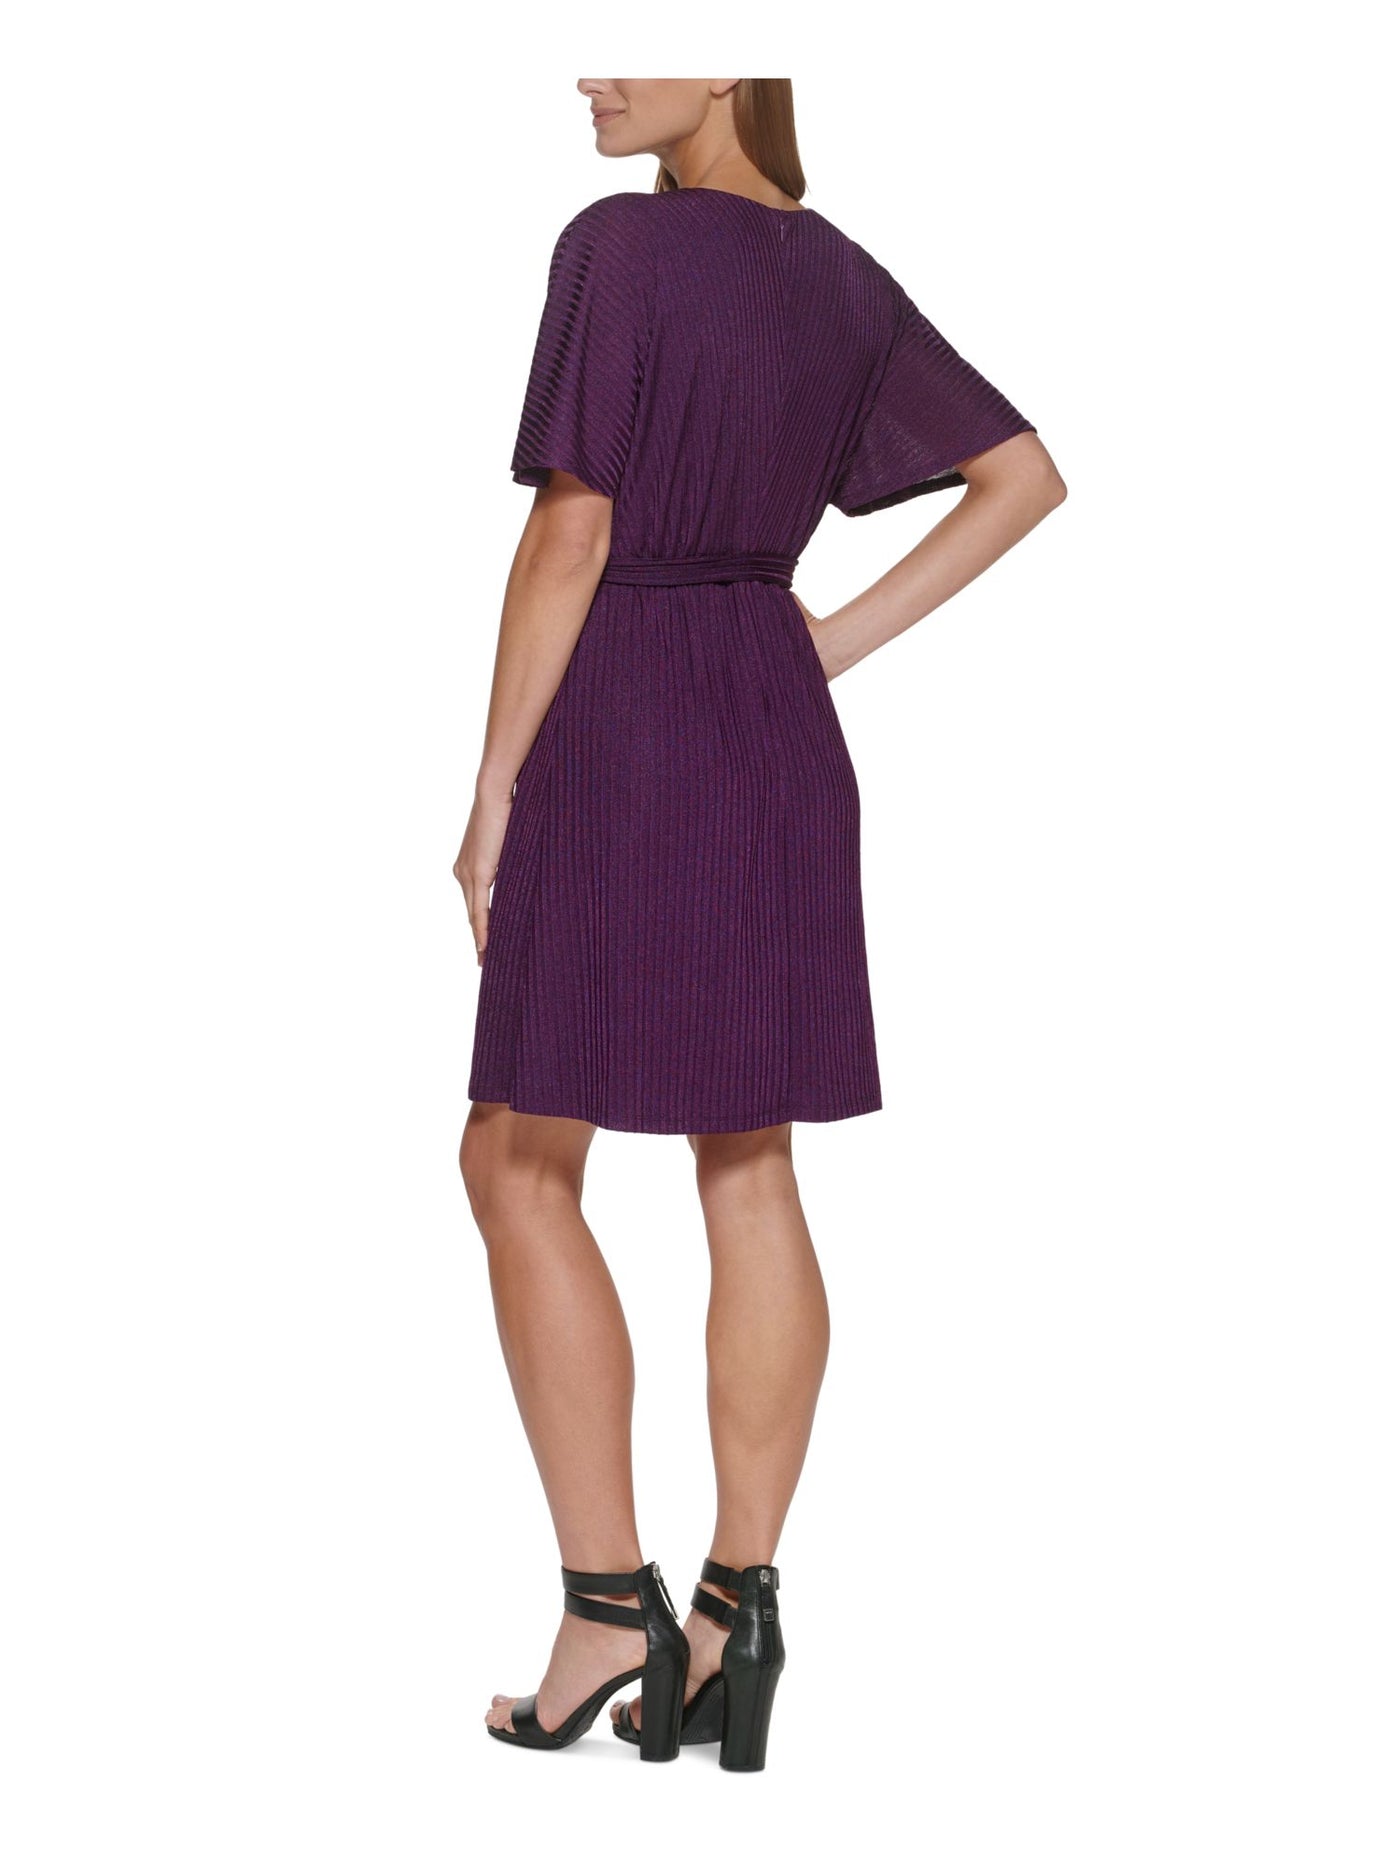 DKNY Womens Purple Stretch Zippered Belted Lined Short Sleeve Surplice Neckline Above The Knee Wear To Work Sheath Dress 6